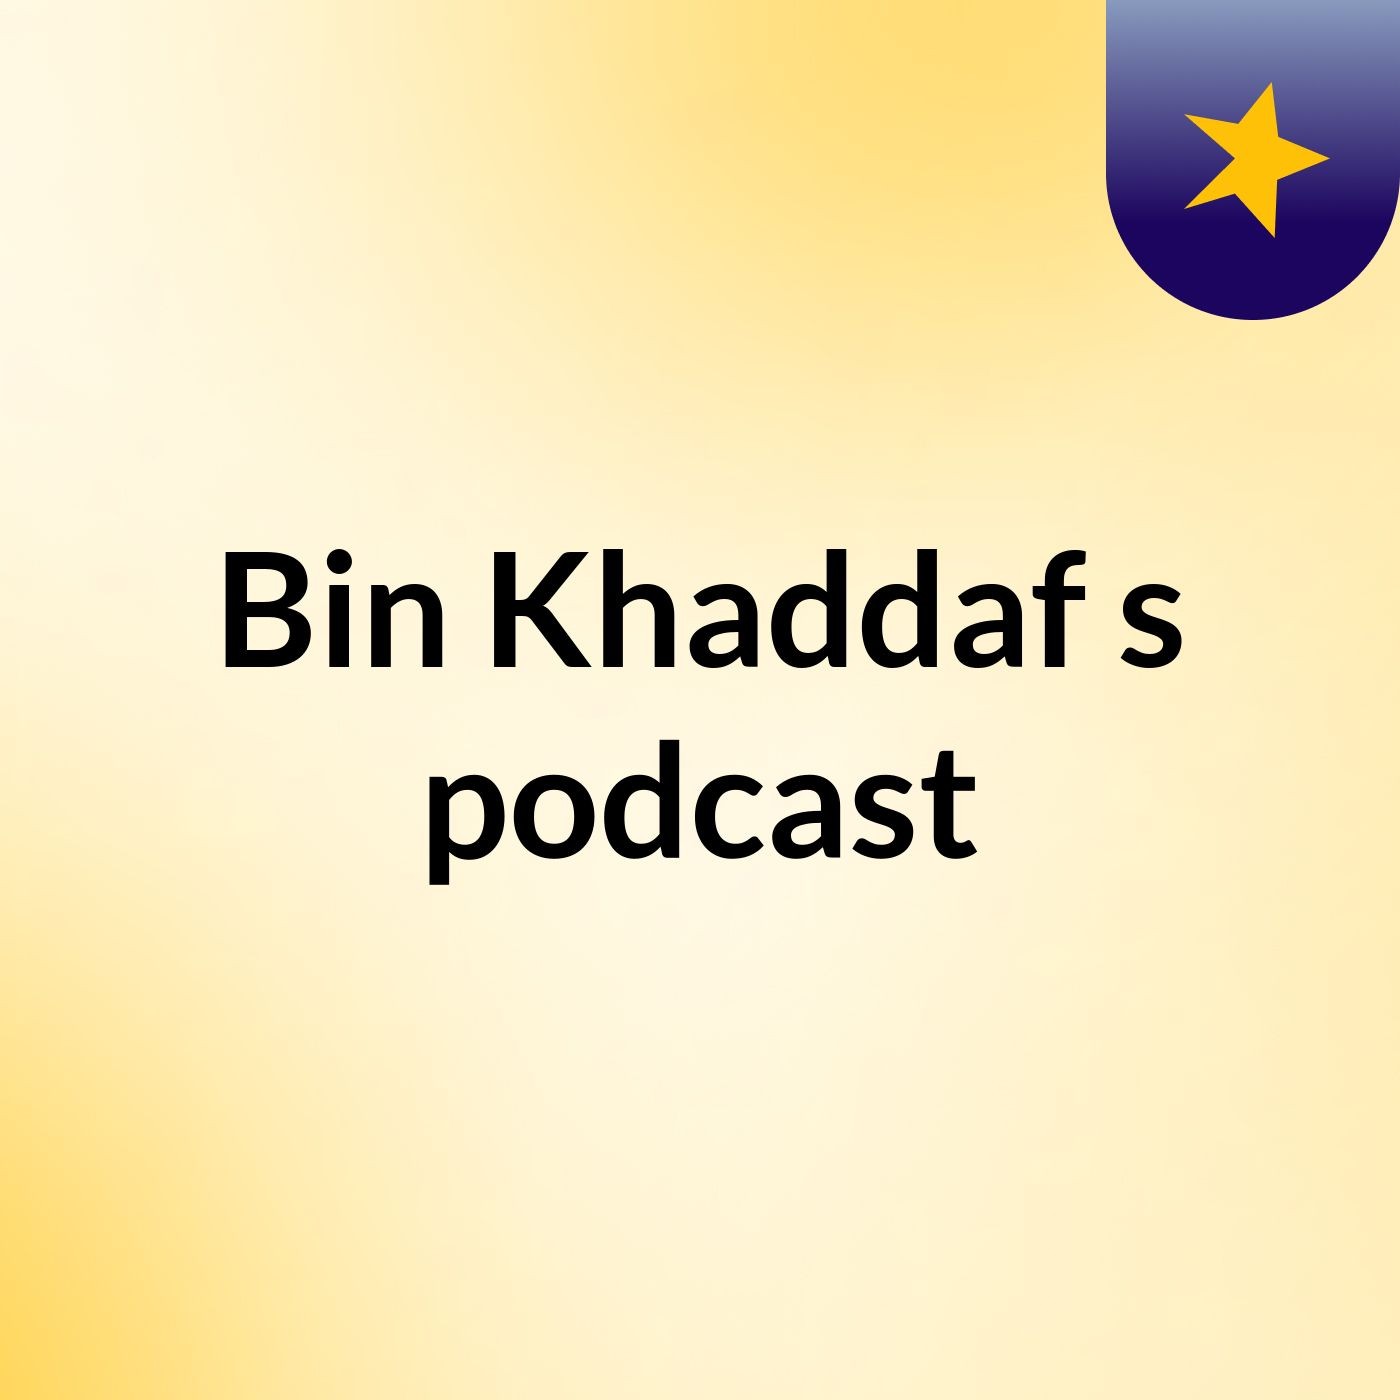 Bin Khaddaf's podcast